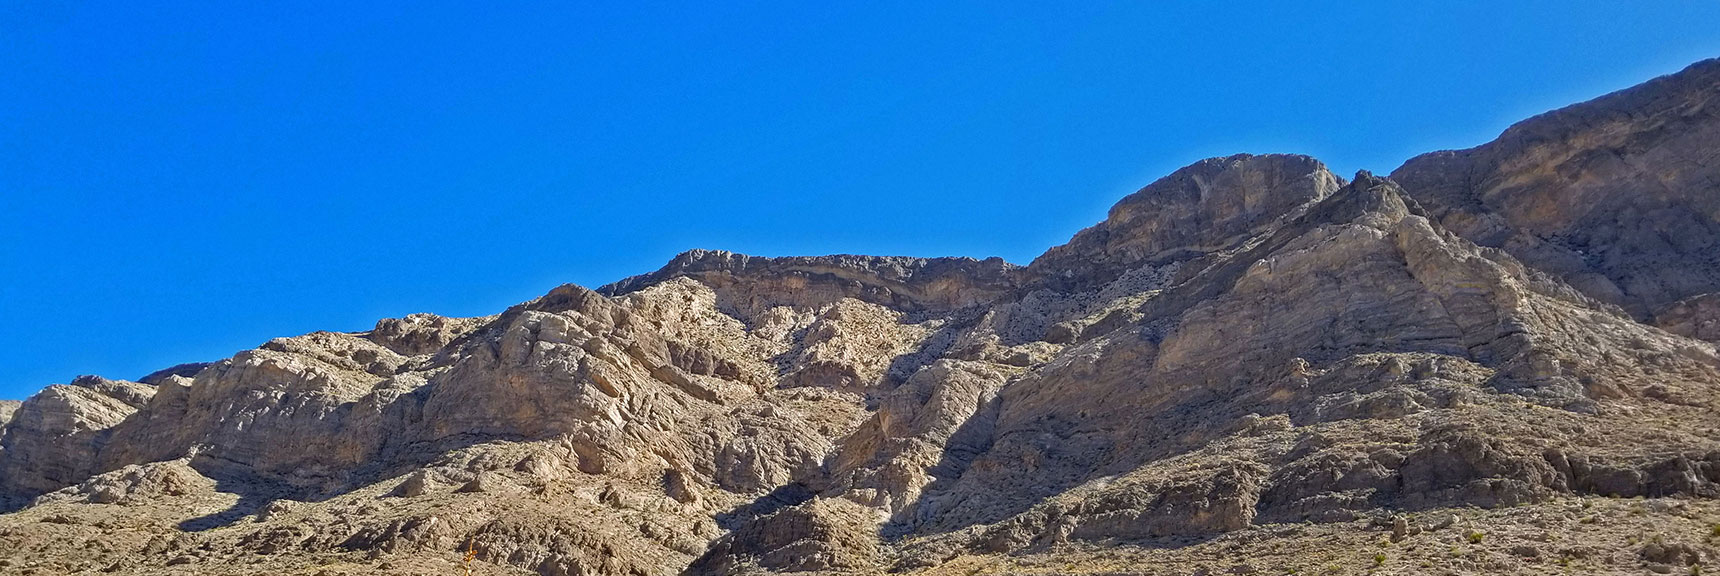 Cliffs East of Saddle Approach. Class 3-5 Climbing Skills Needed | Little La Madre Mt, Little El Padre Mt, Little Burnt Peak | Near La Madre Mountains Wilderness, Nevada